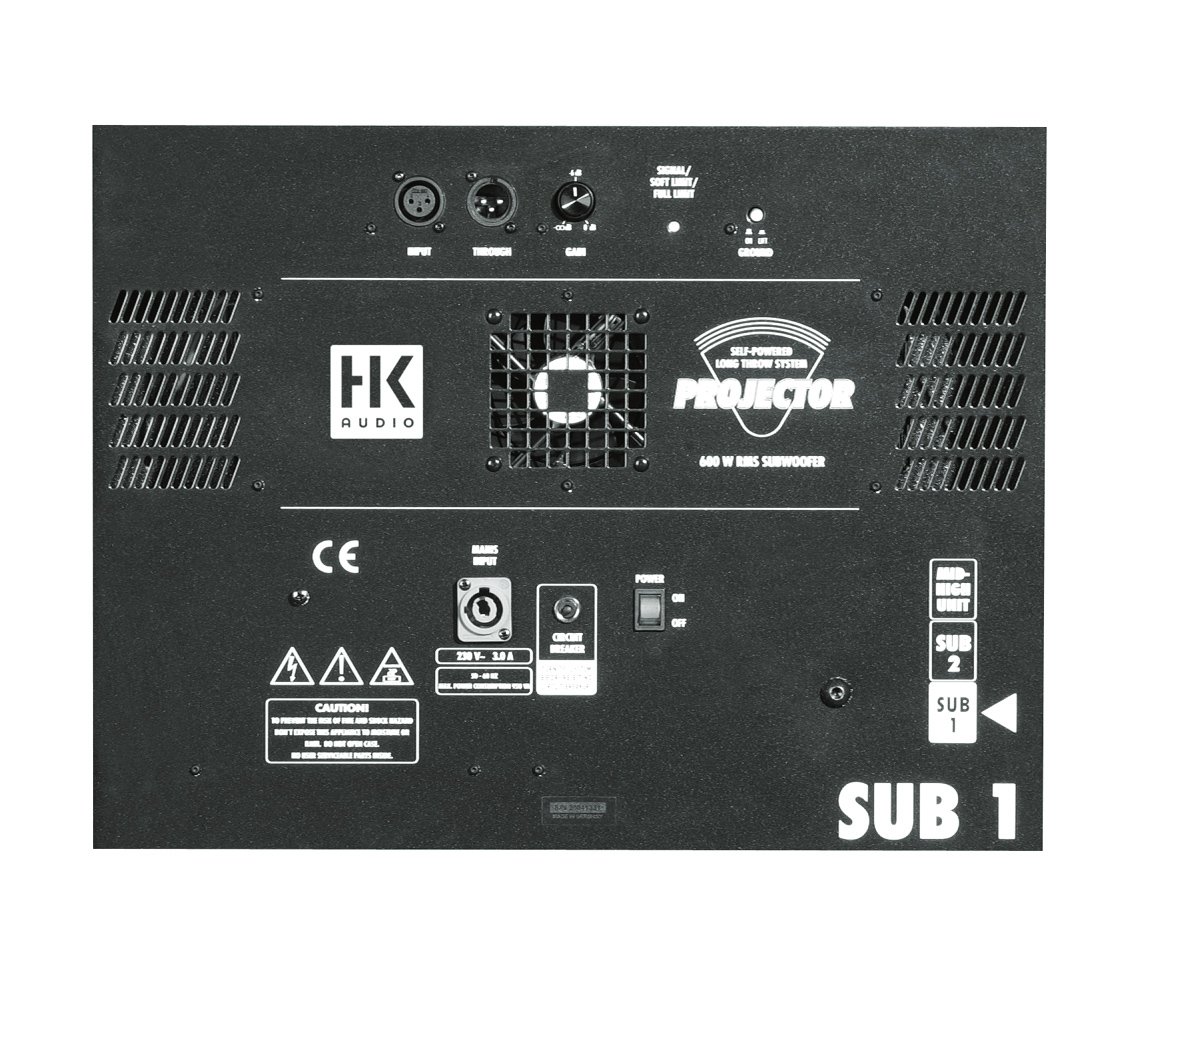 HK Audio Projector Sub 1 Rear